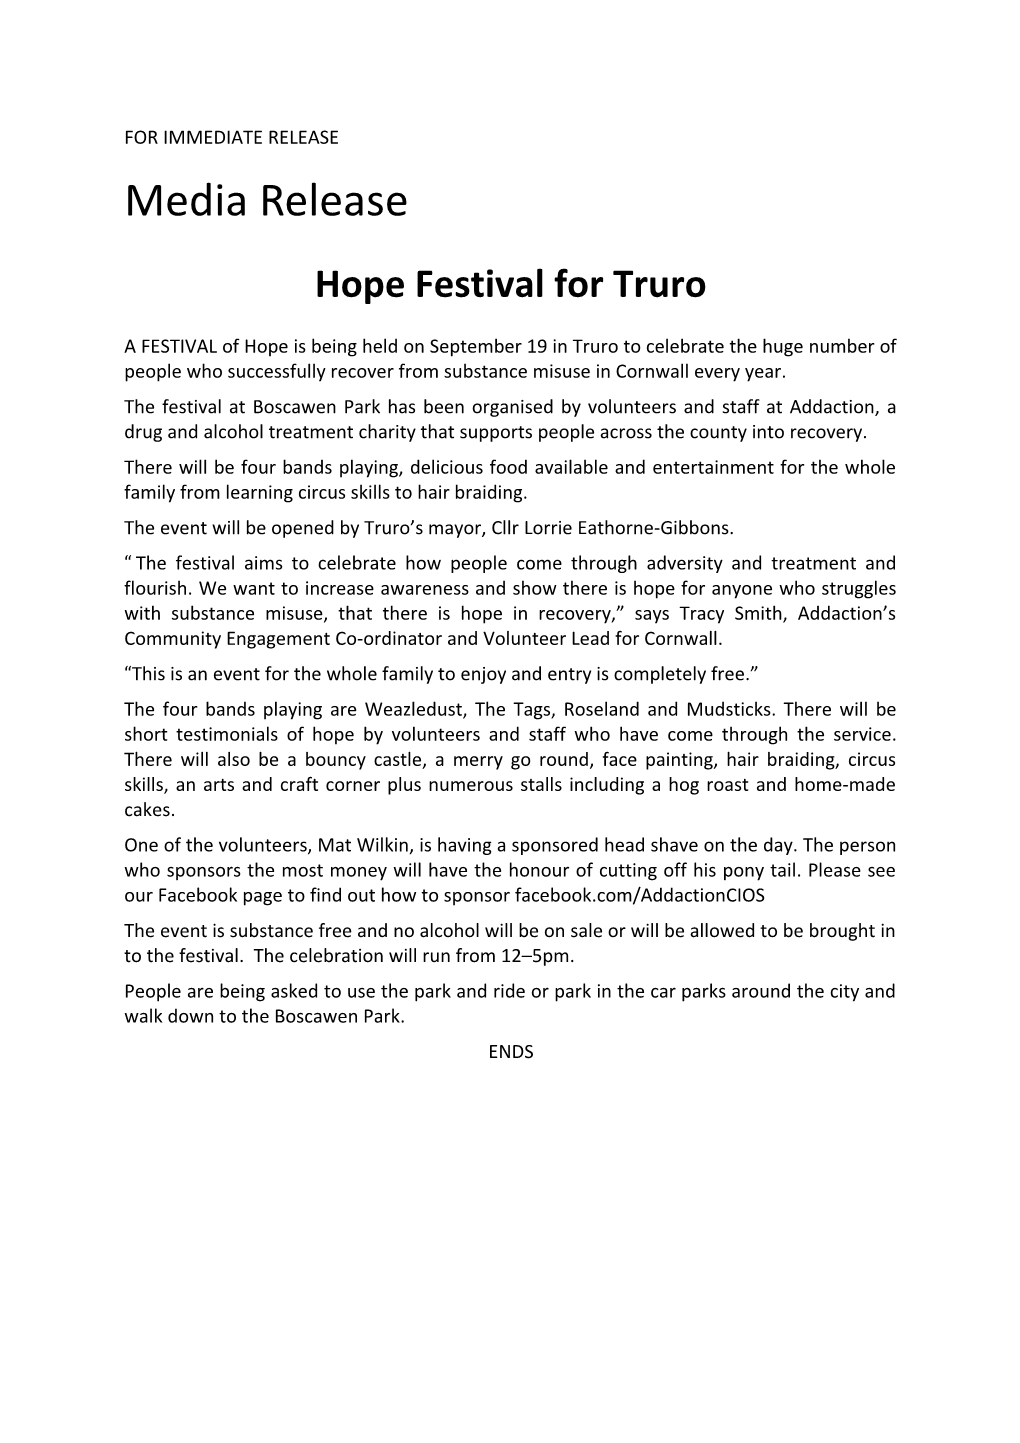 Hope Festival for Truro